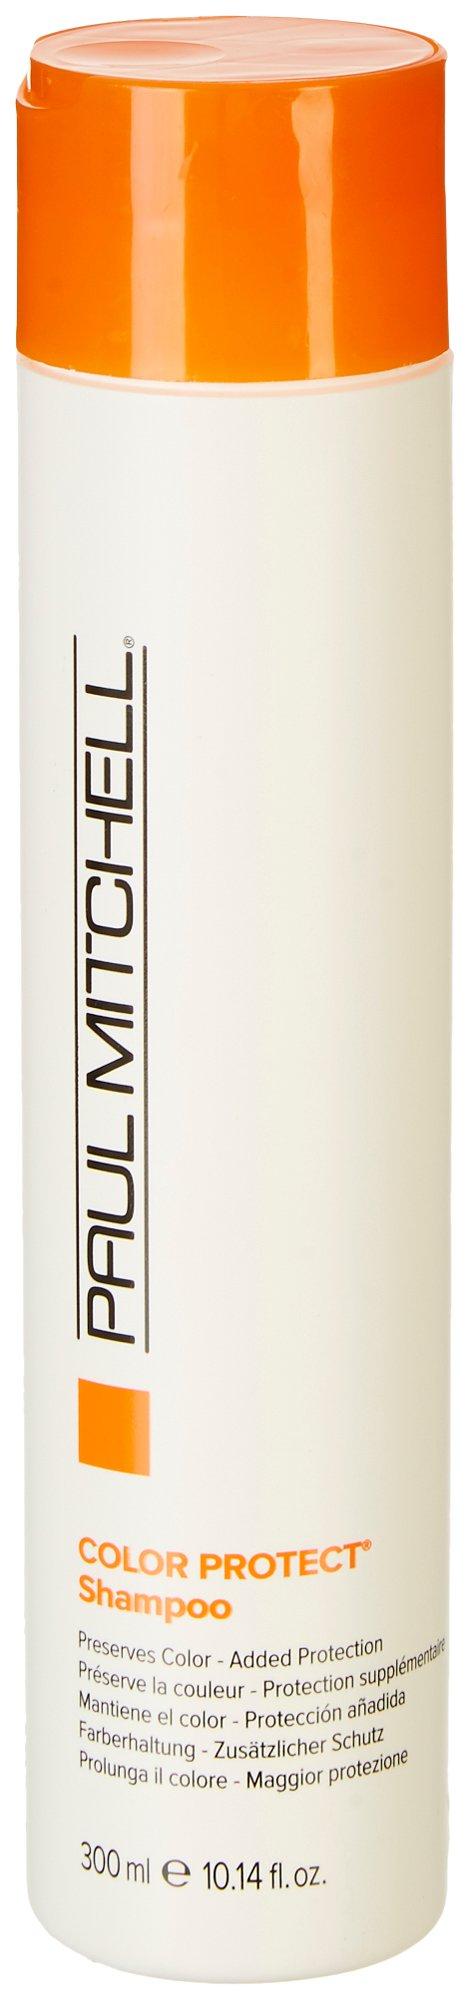 Paul Mitchell Color Protect Shampoo 10.14 fl. oz.